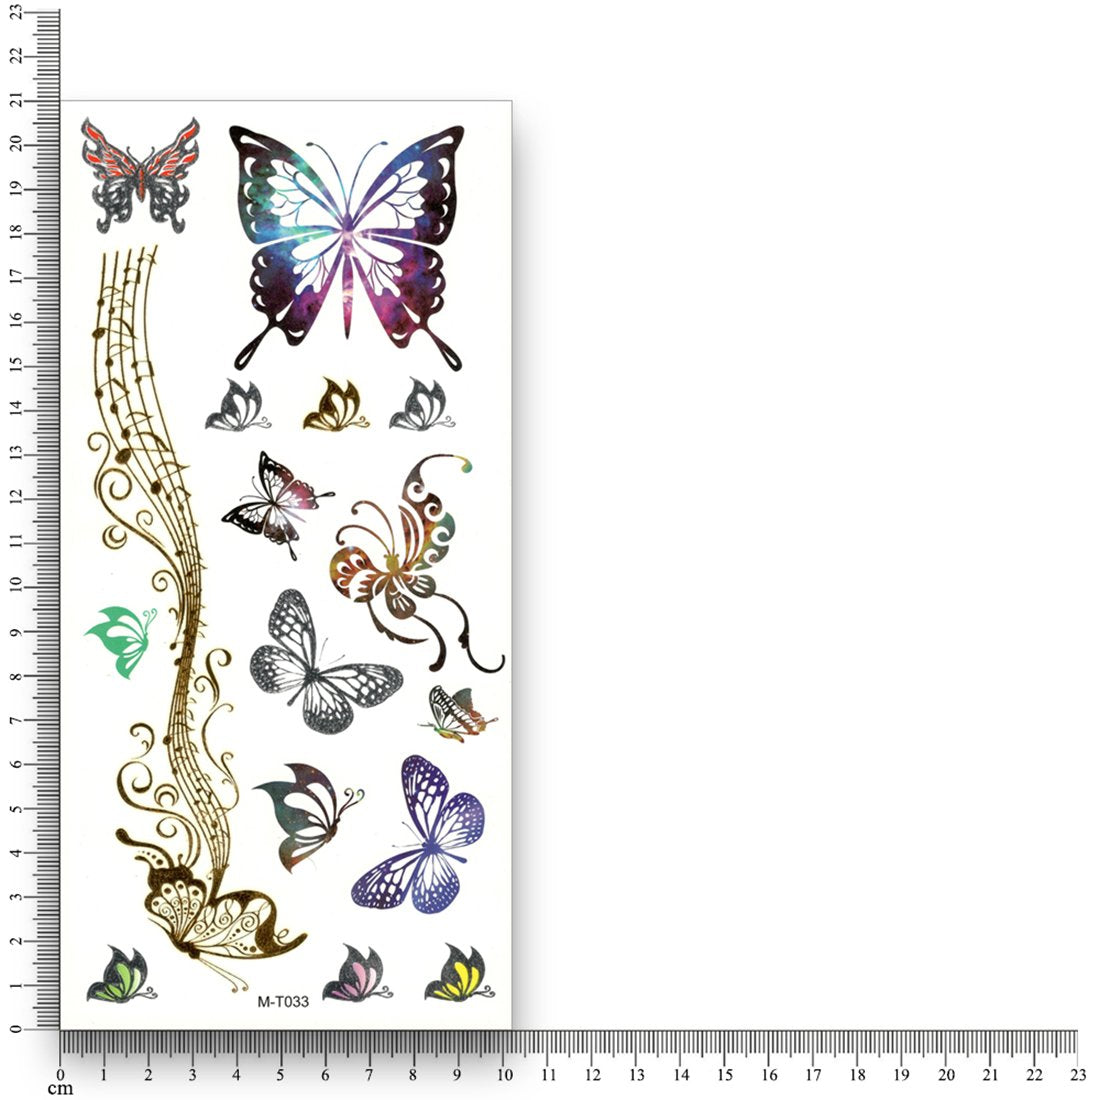 3DEREBEX  Temporary Tattoo Golden And Silver Metallic Sticker Butterflies Design Size 21x10CM - 1PC.